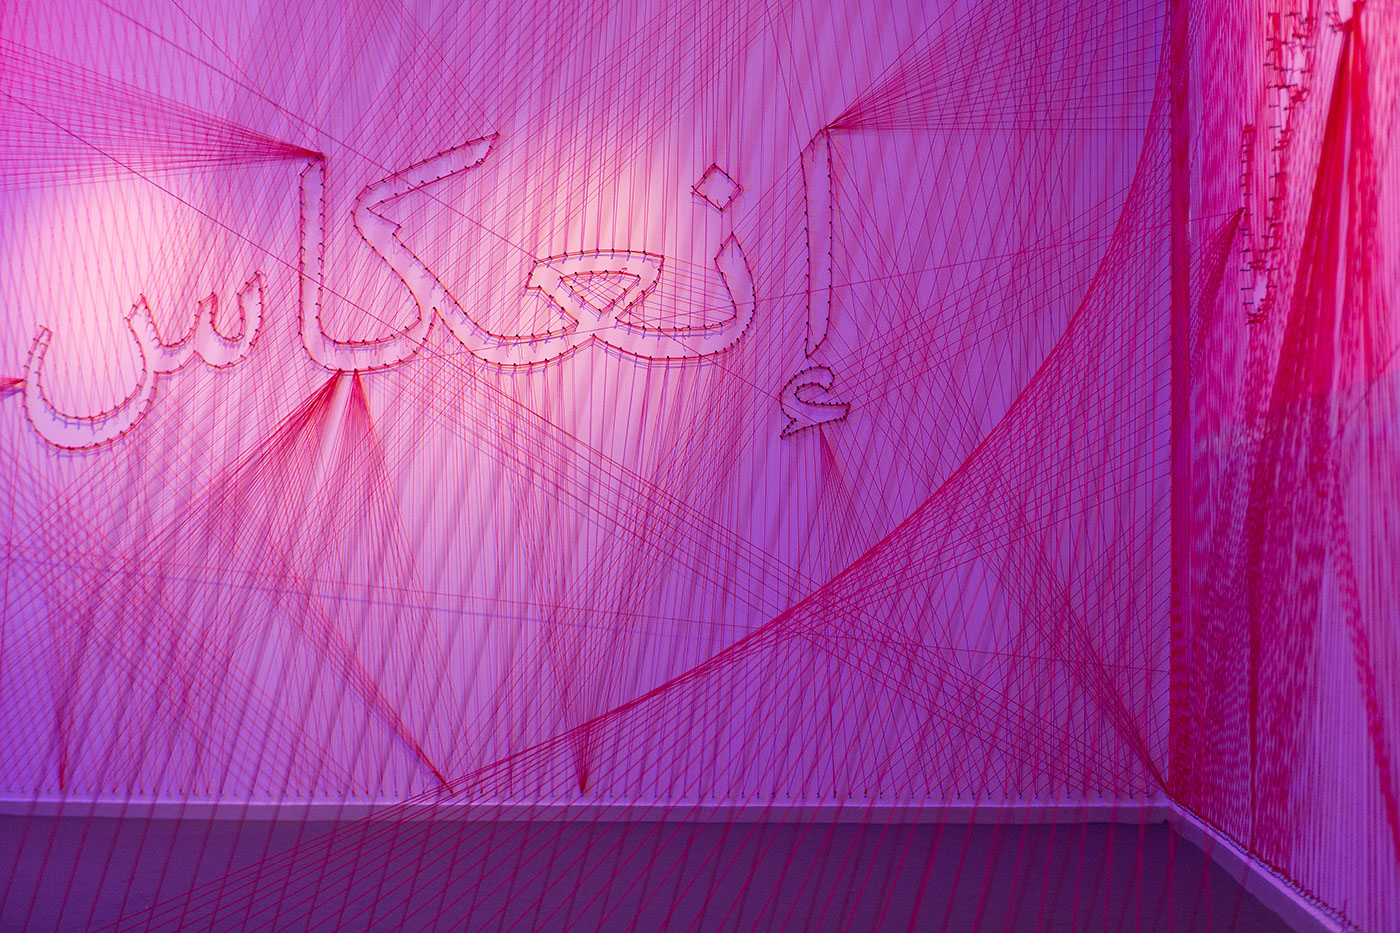 lettering yarn calligraphy arabic calligraphy yarn installation calligraphy biennial Calligraphy Masters caligrafia calligrafia yarn art handcrafted Typography Installation